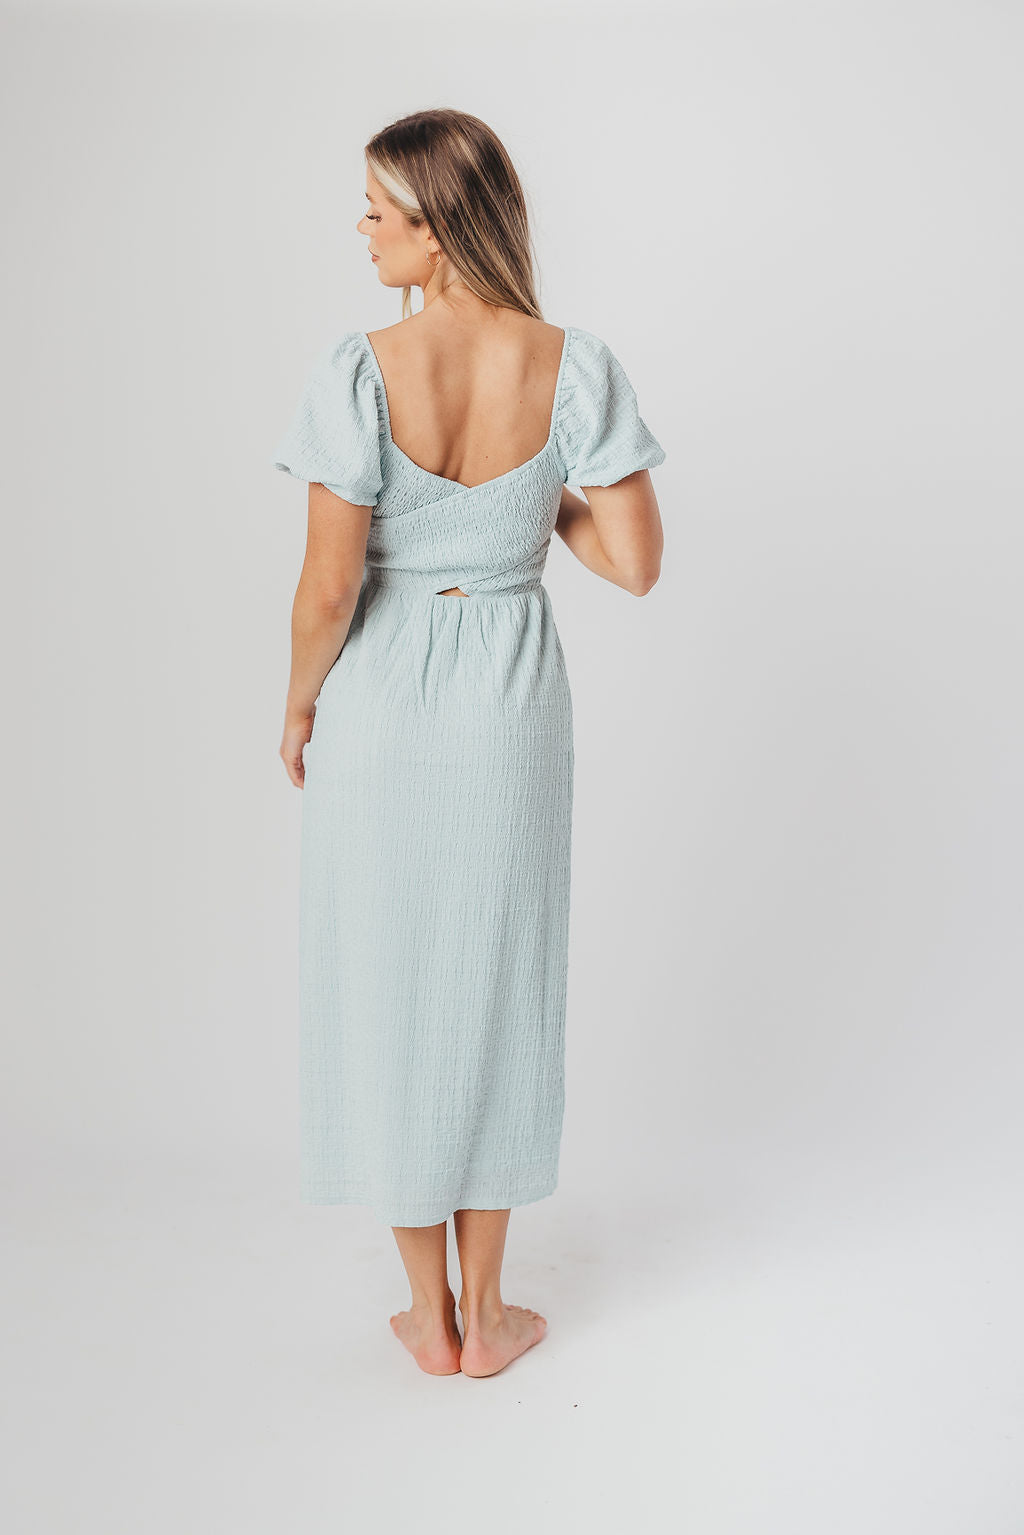 Maria Sweetheart Neckline Midi Dress in Powder Blue - Bump Friendly & Inclusive Sizing (S-3XL) Pre-Order 5/15